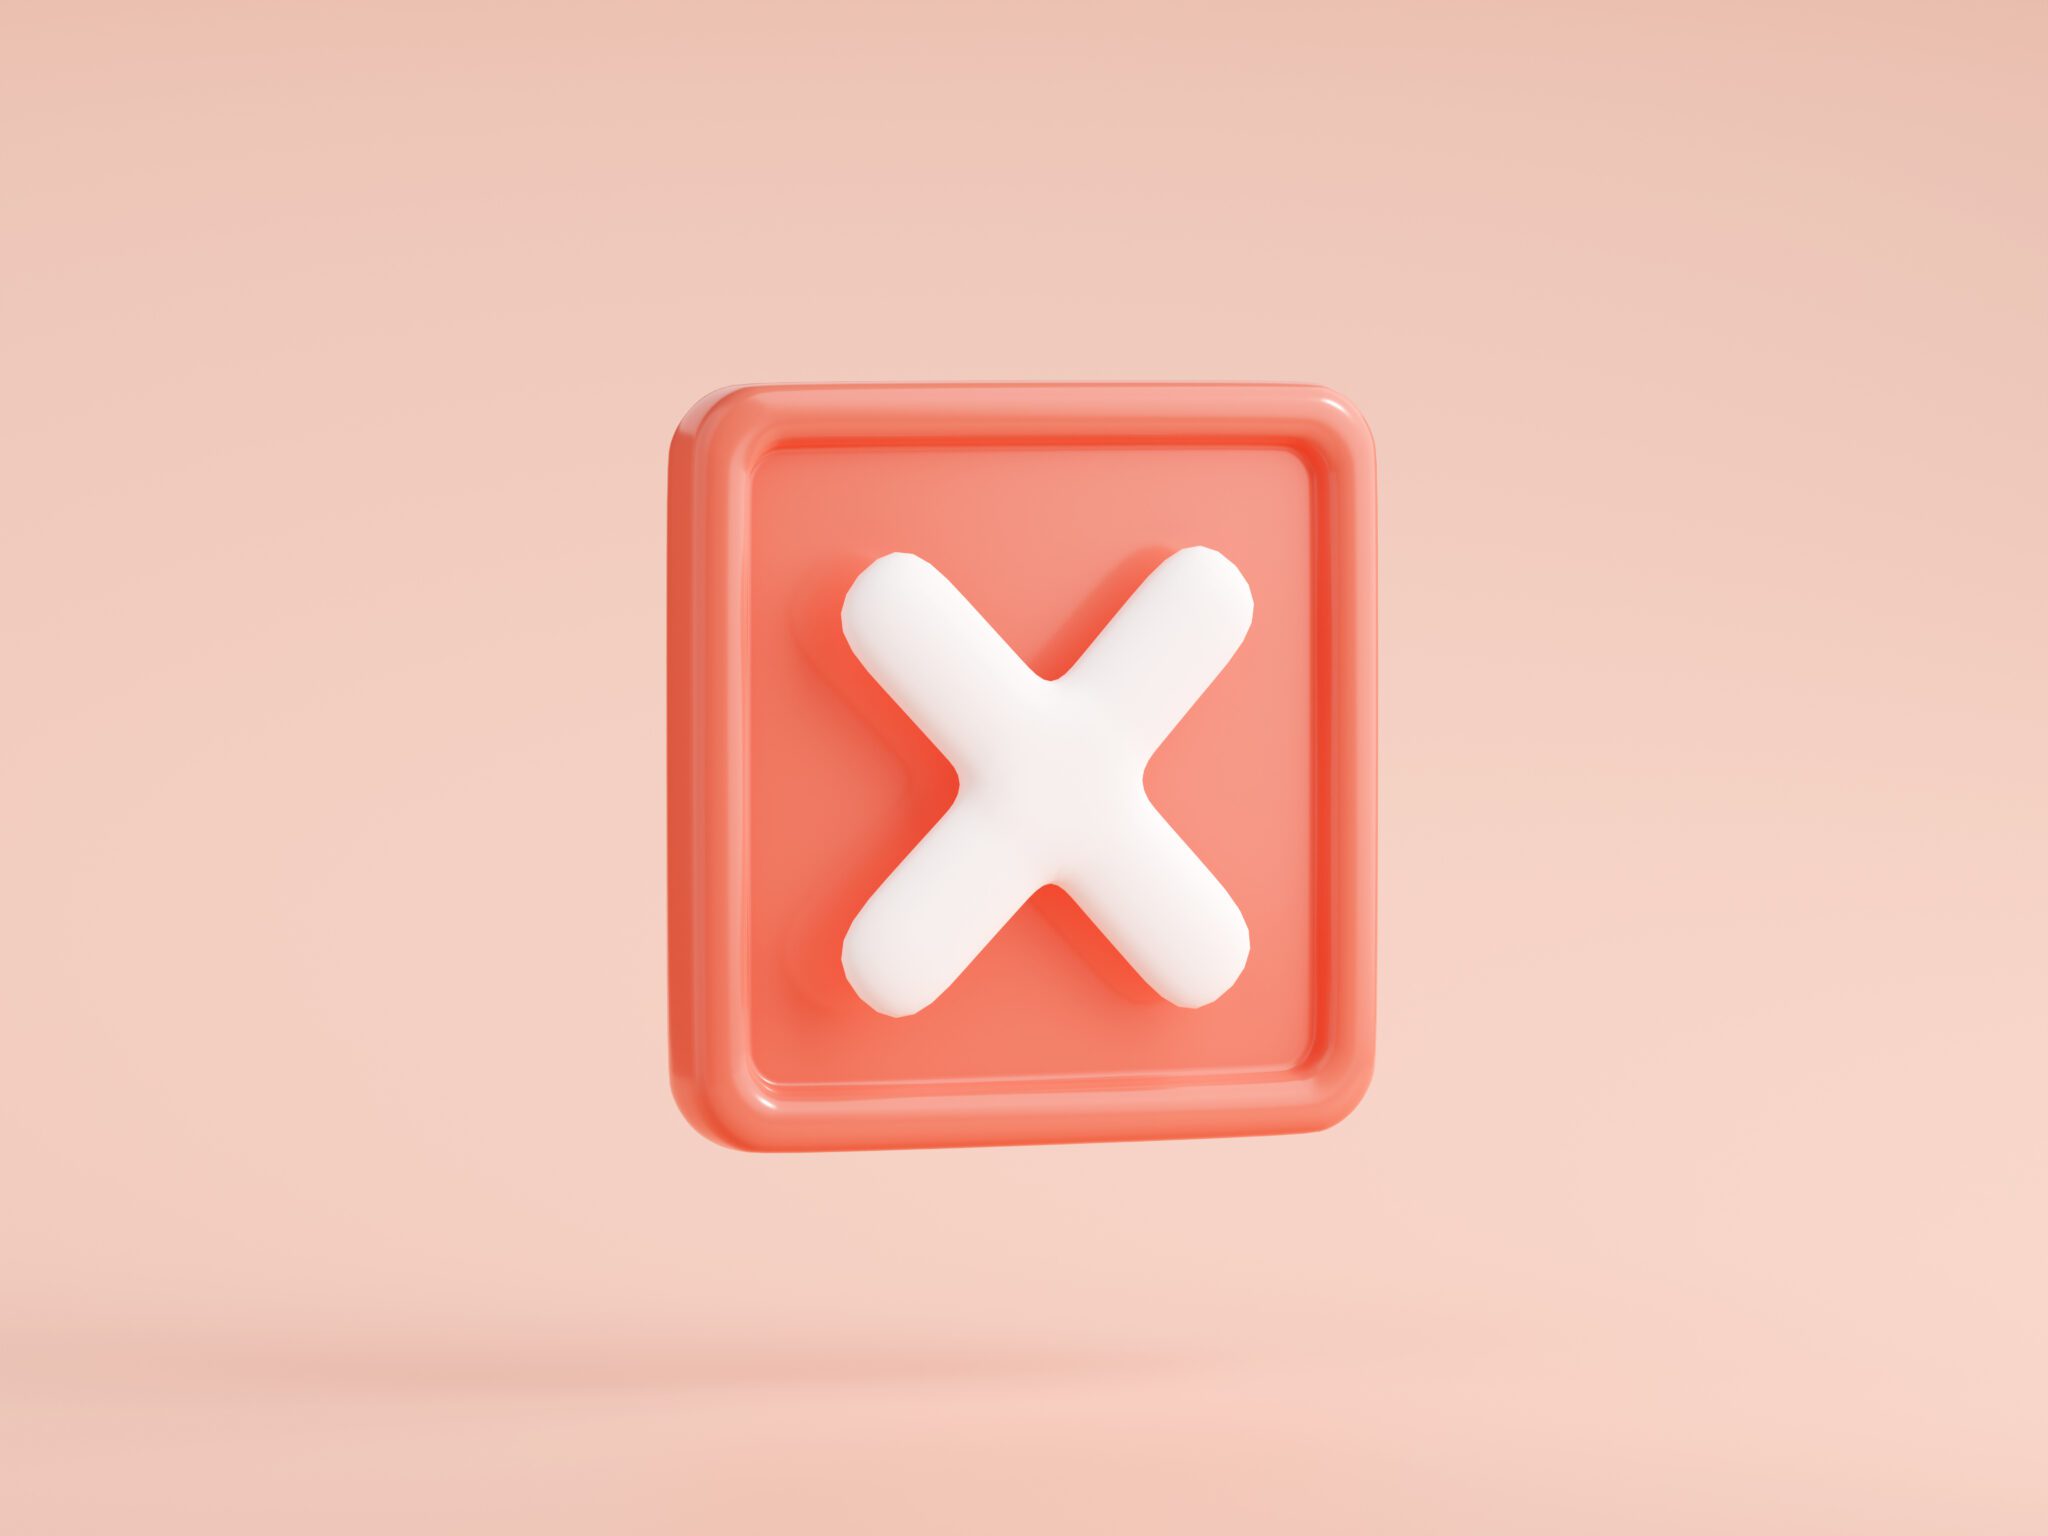 3d Render Cross Mark Isolated Icon, Error X Symbol